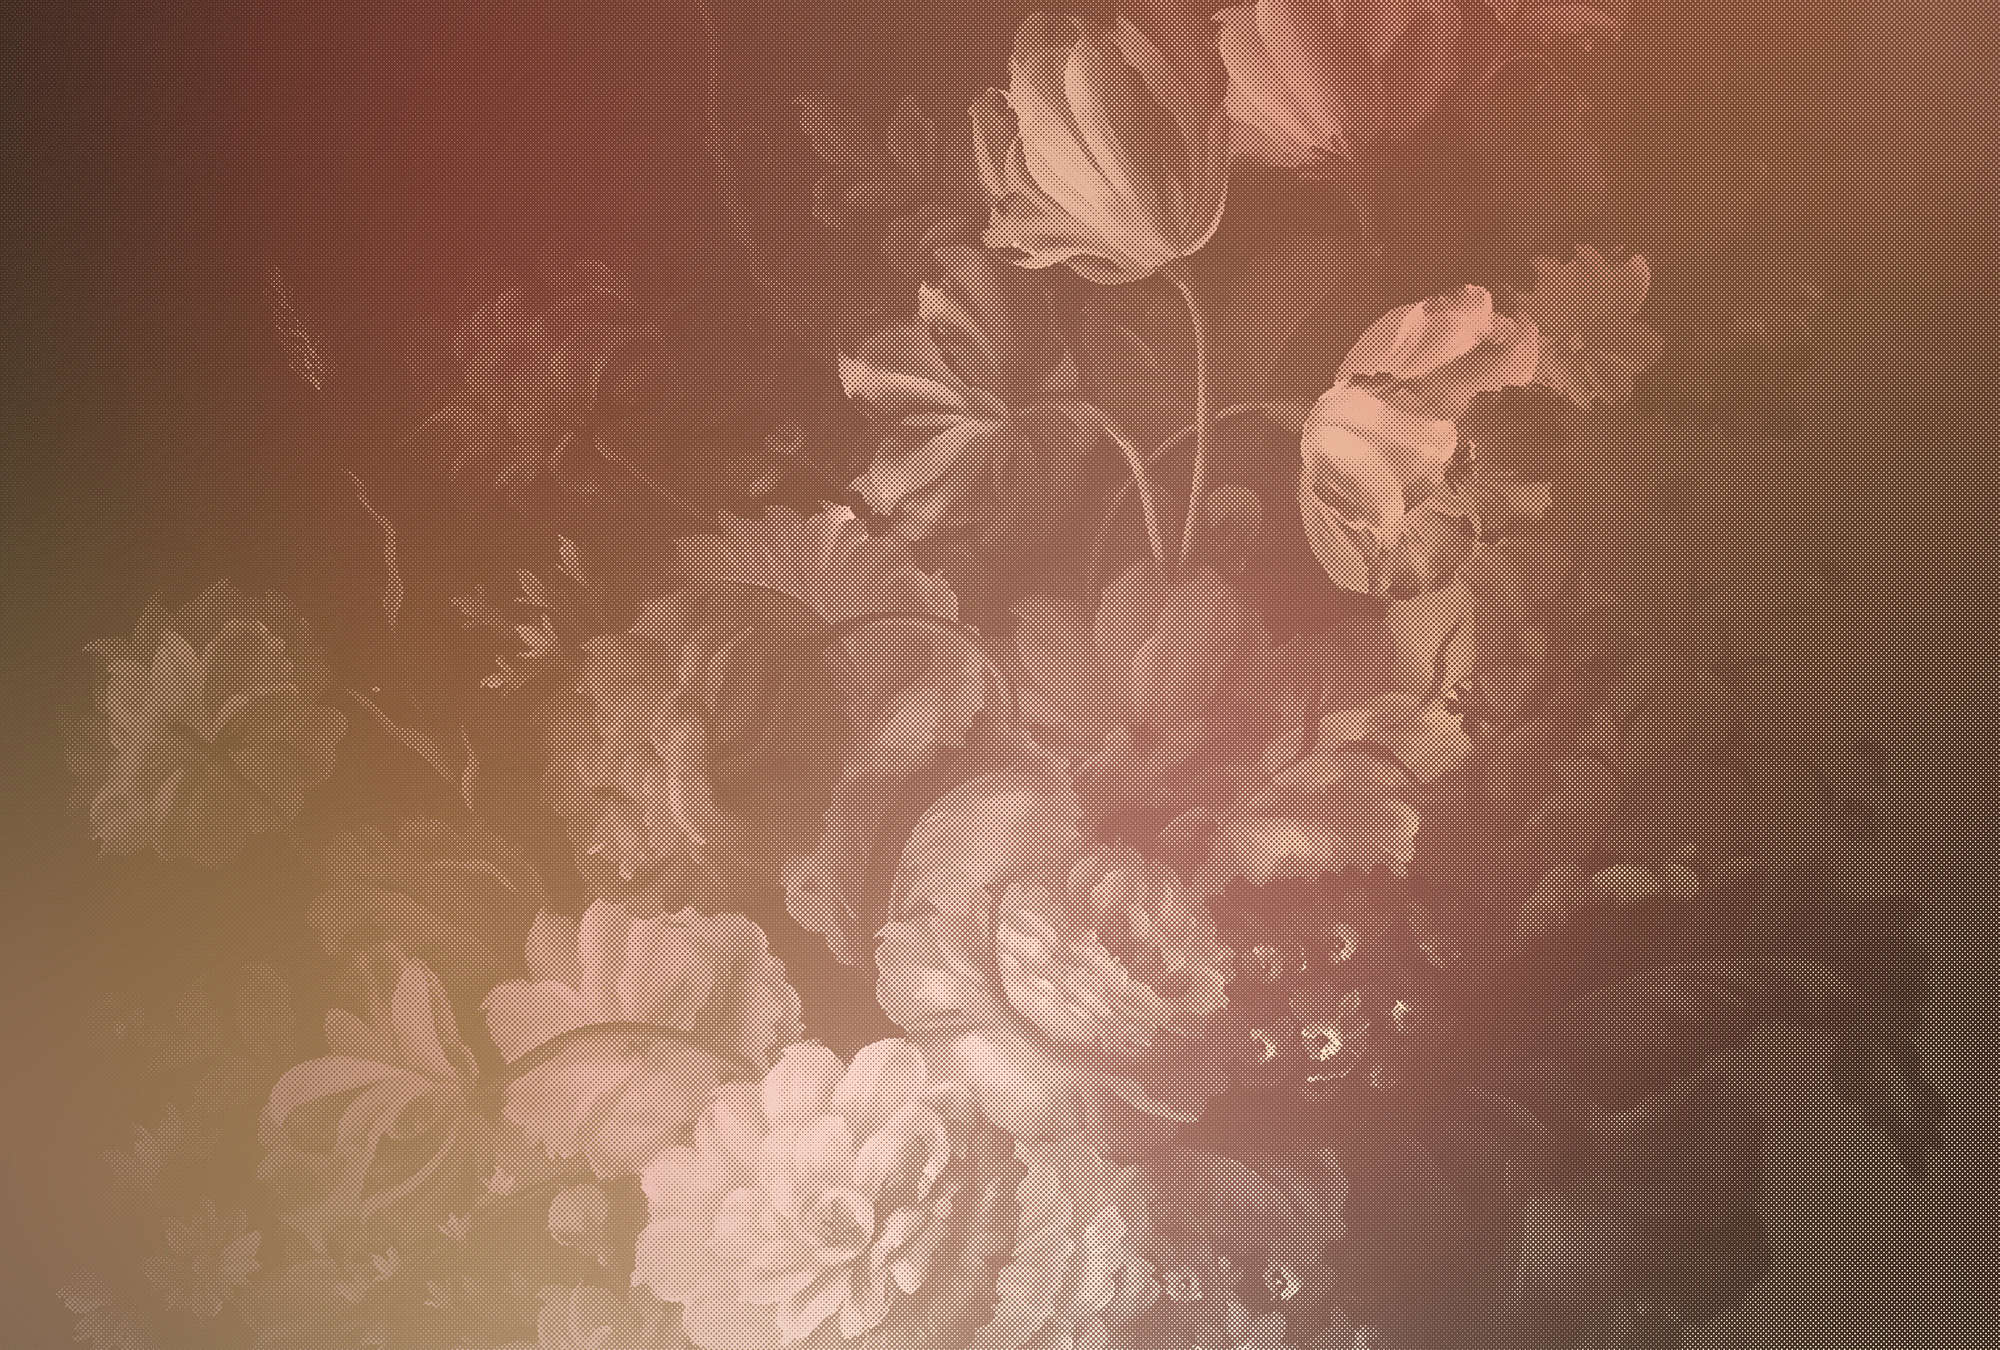             Dutch pastel 3 - Fotomural Bouquet en estilo Dutch Flower - Rosa, Rojo | Estructura no tejida
        